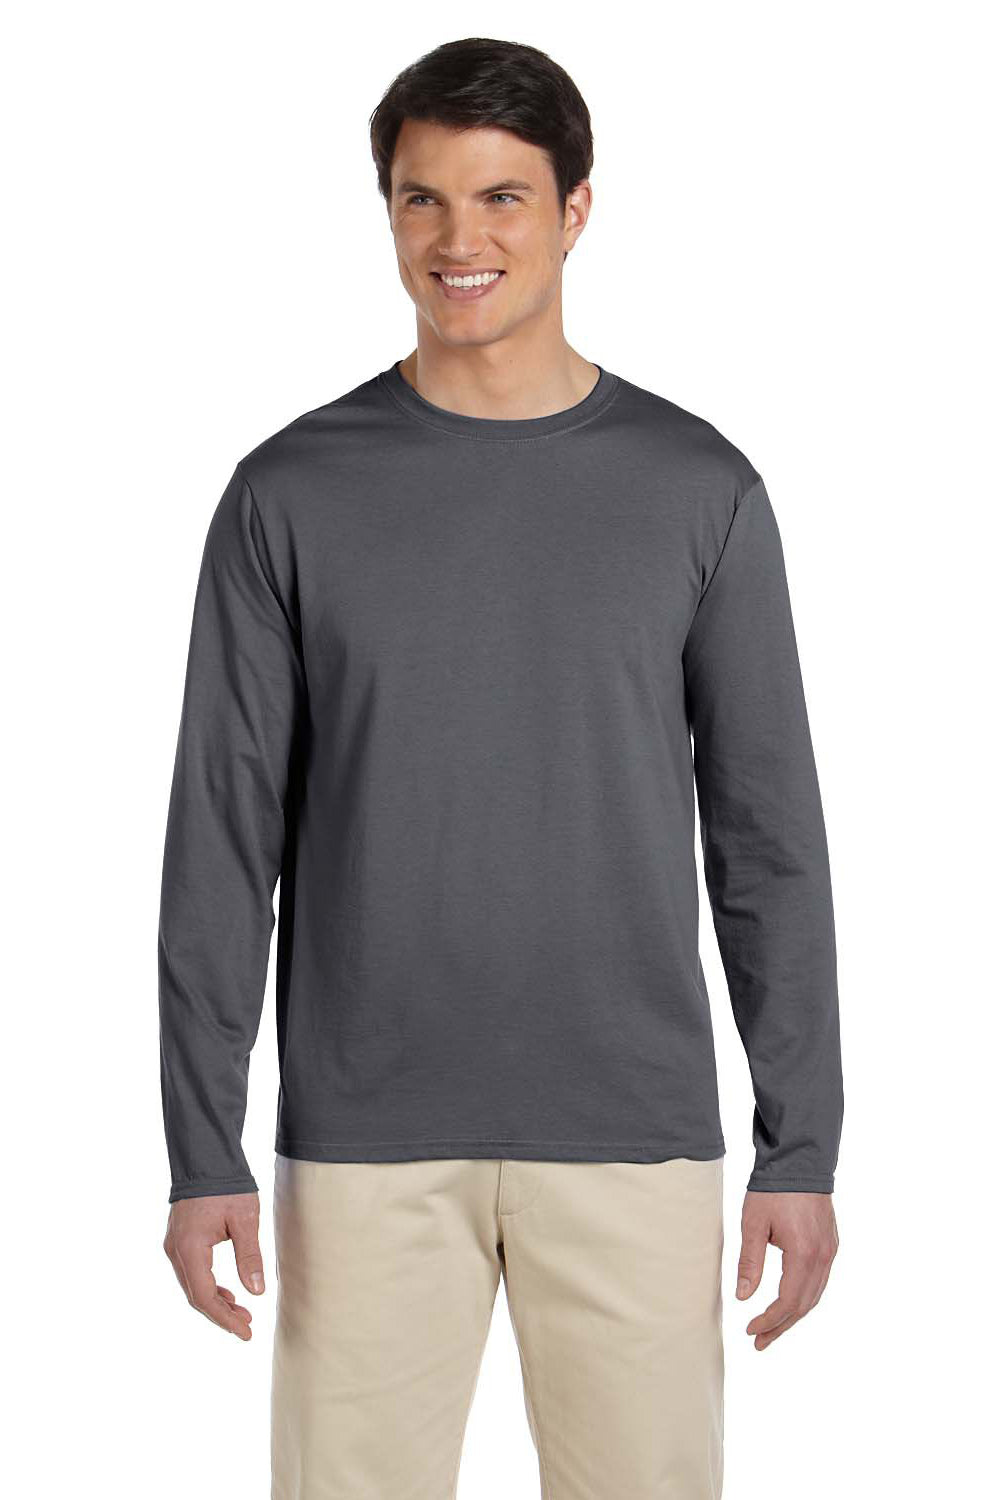 Gildan G644 Mens Softstyle Long Sleeve Crewneck T-Shirt Charcoal Grey Front